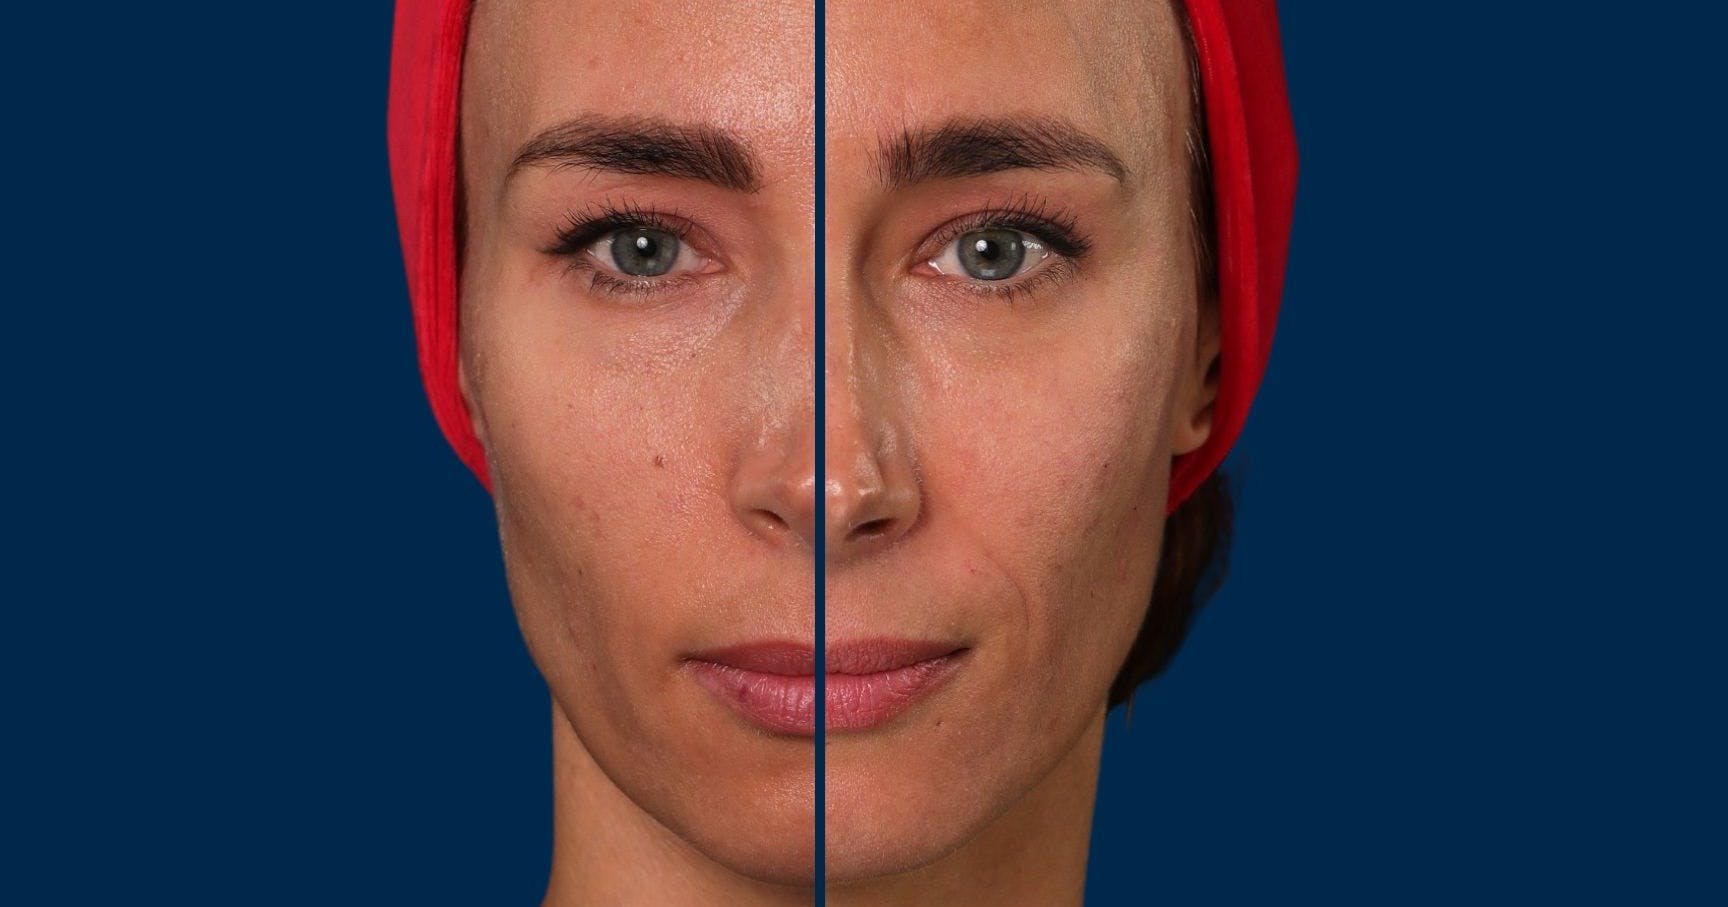 TOP BOX Subtle Facial Rejuvenation Eye Lift and Mid-Face Filler Demonstration